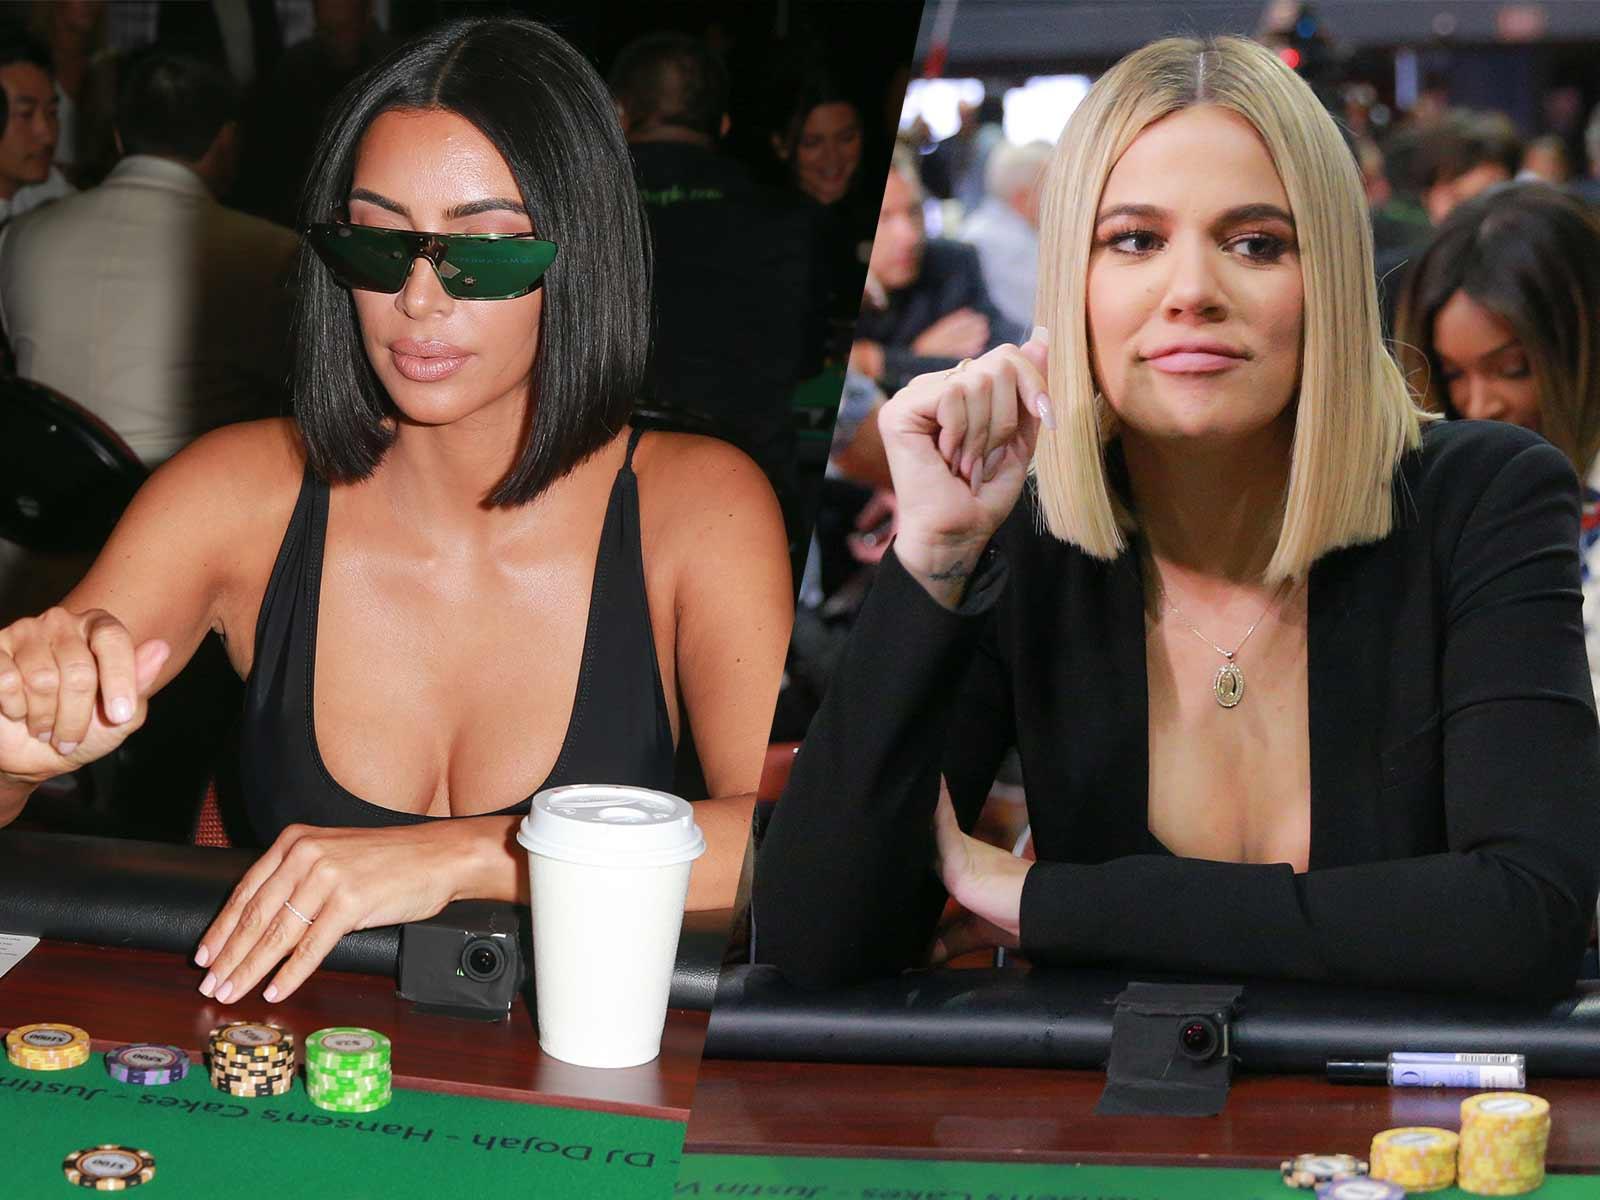 Kardashian Sisters Show Off Their Racks at Charity Poker Tourney